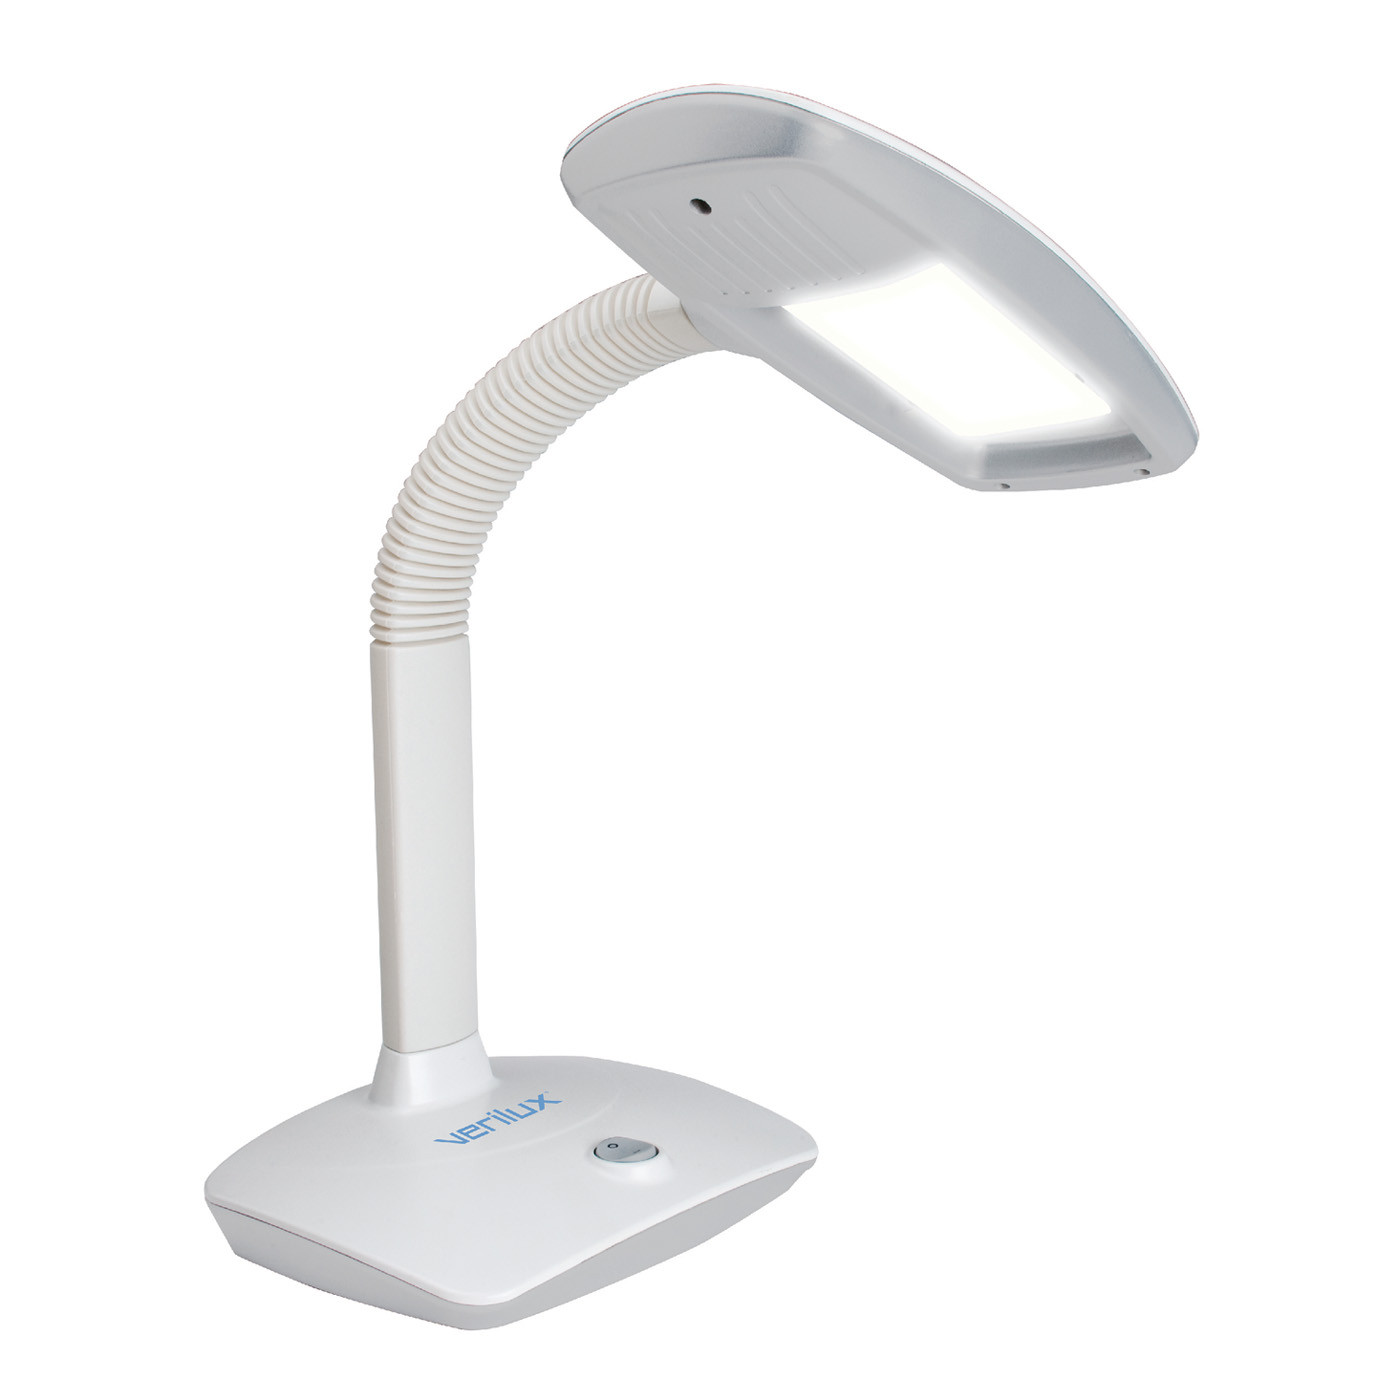 Best ideas about Verilux Desk Lamp
. Save or Pin Verilux VD12 SmartLight Desk Lamp Now.